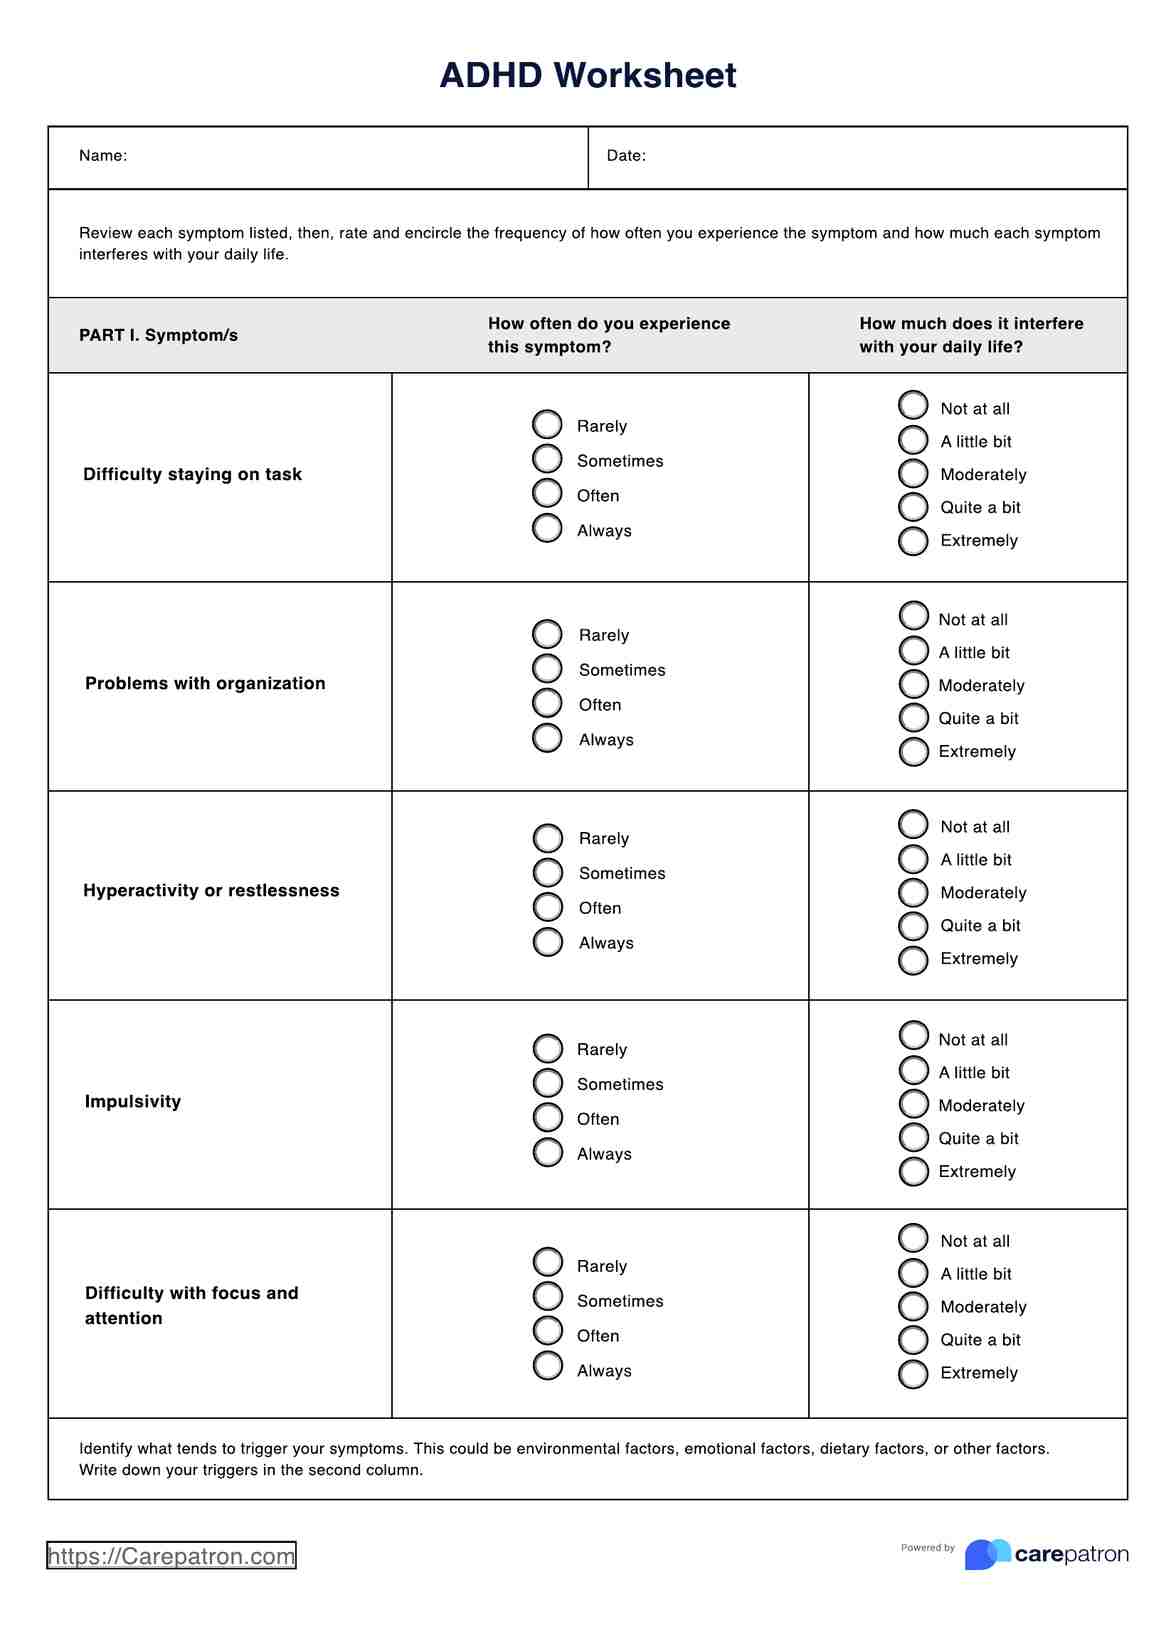 ADHD Worksheets PDF Example